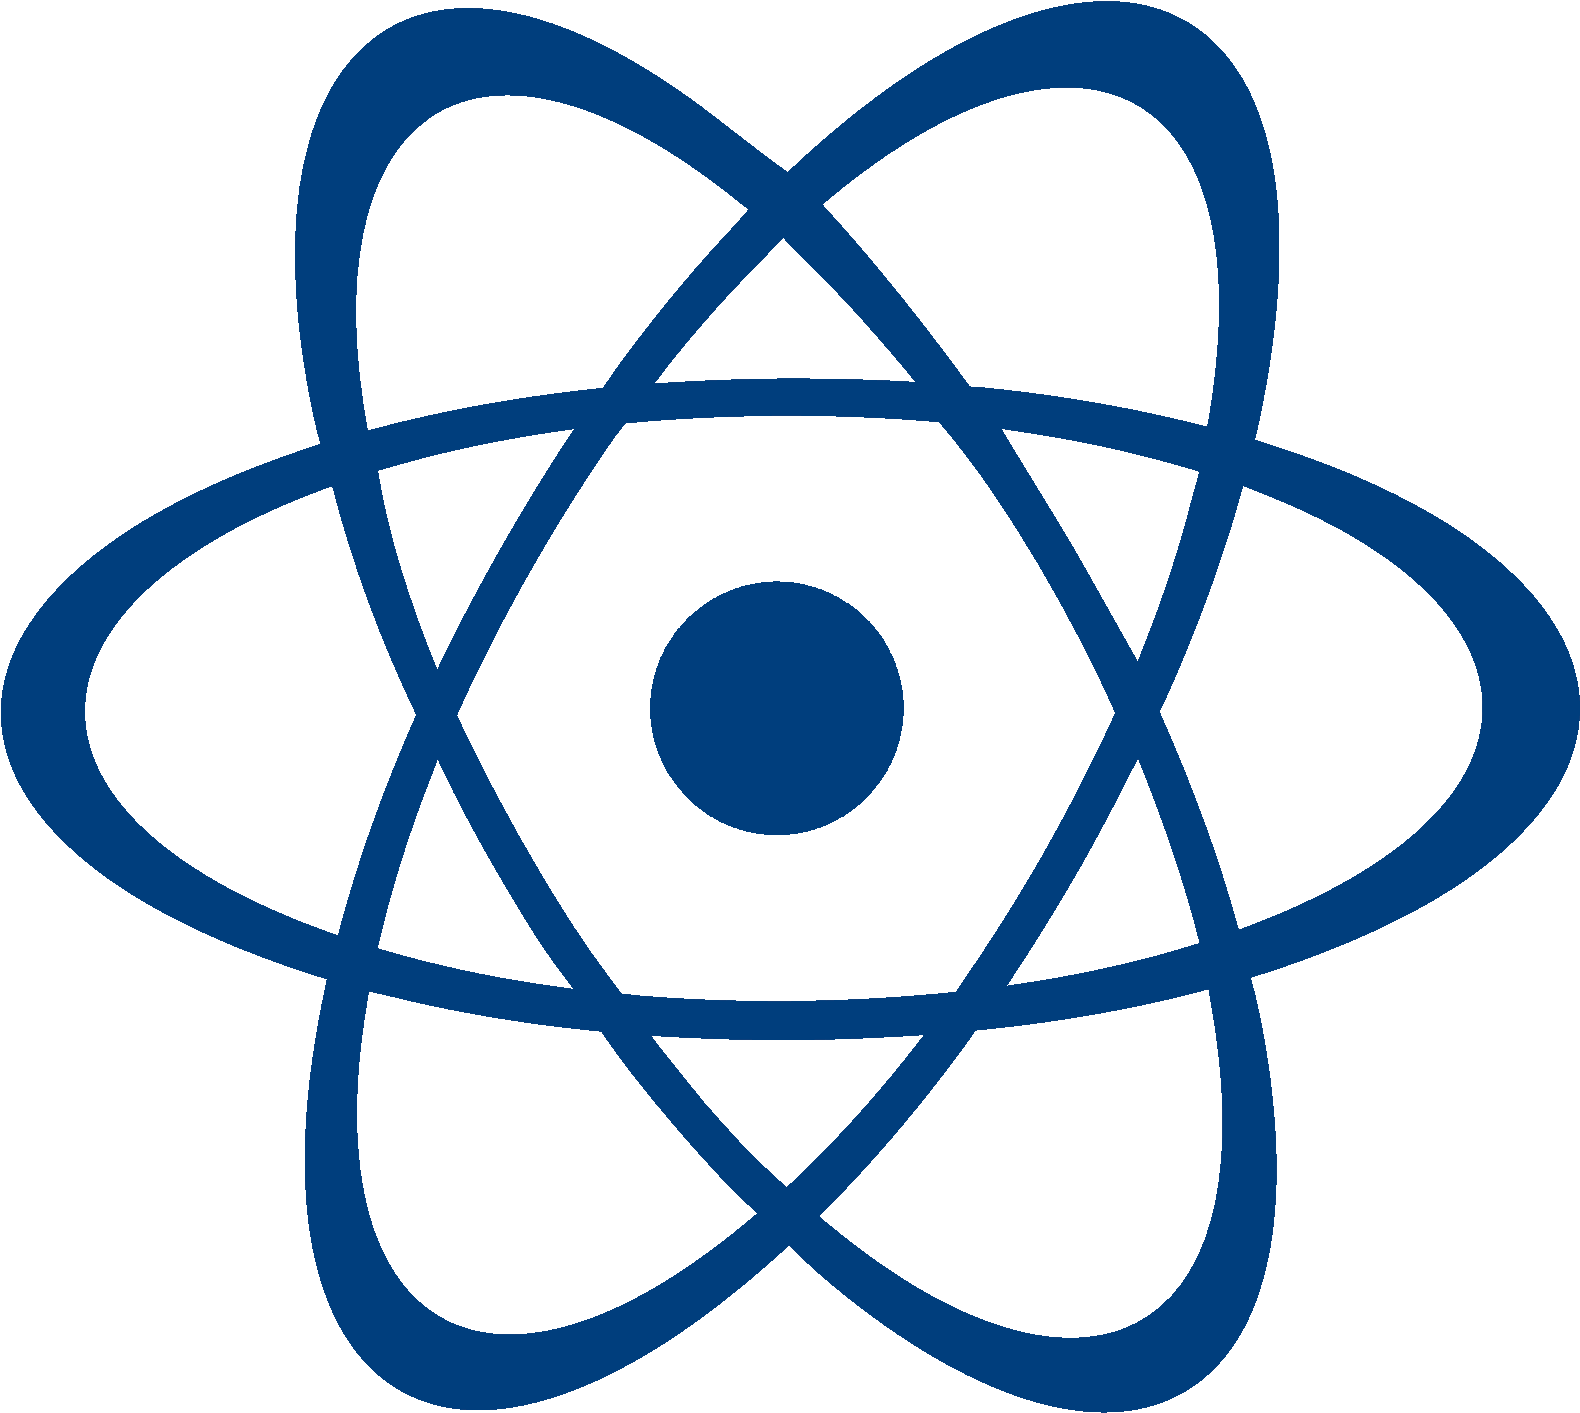 Символ атома. Символ науки. Значок атома. Знак атомной энергетики.